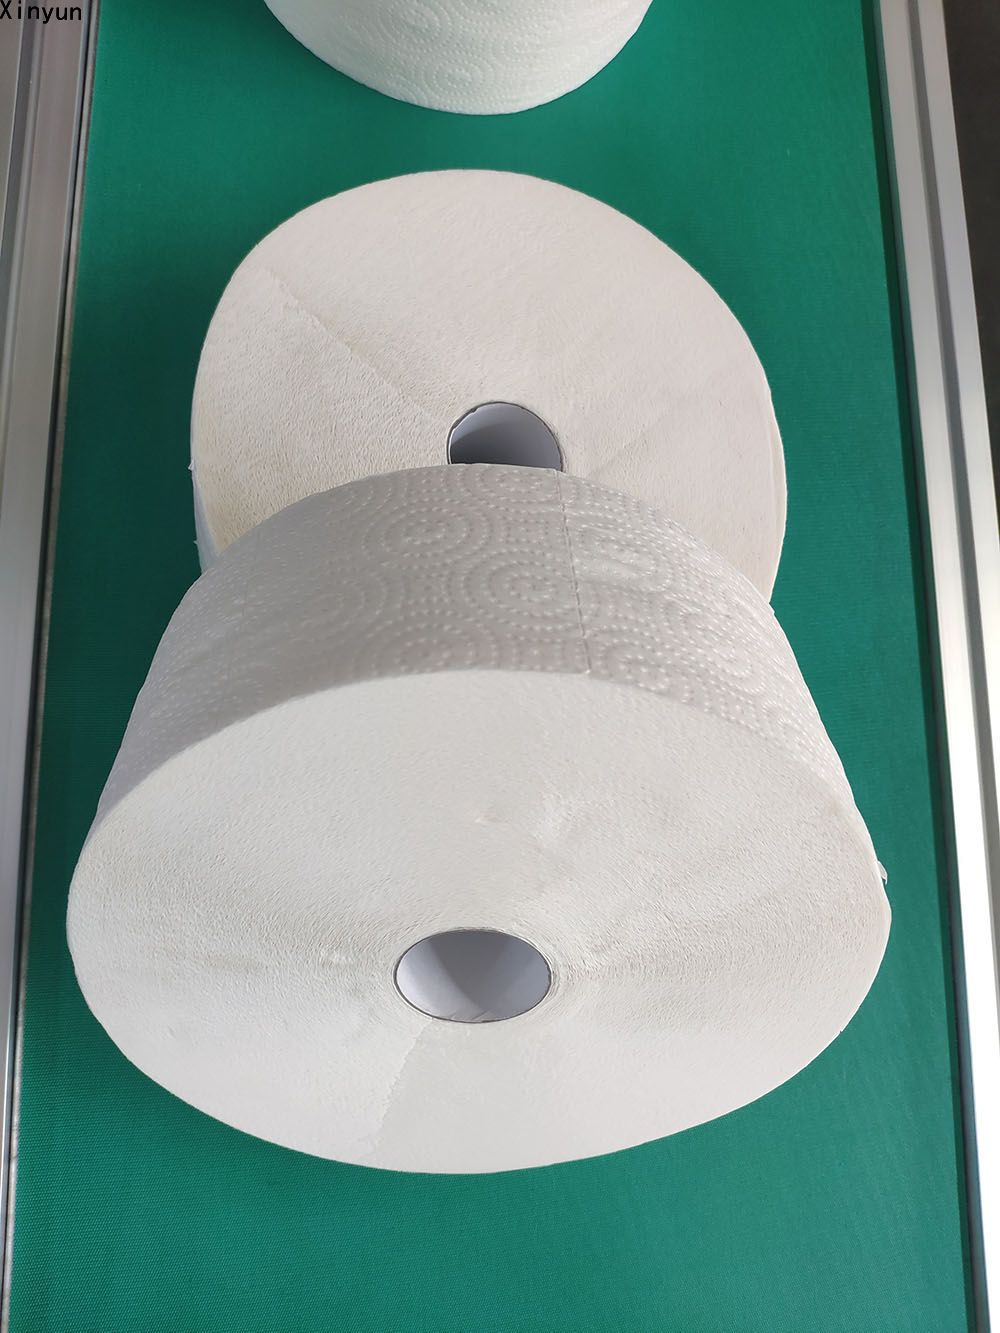 Automatic glue lamination maxi roll paper making machine